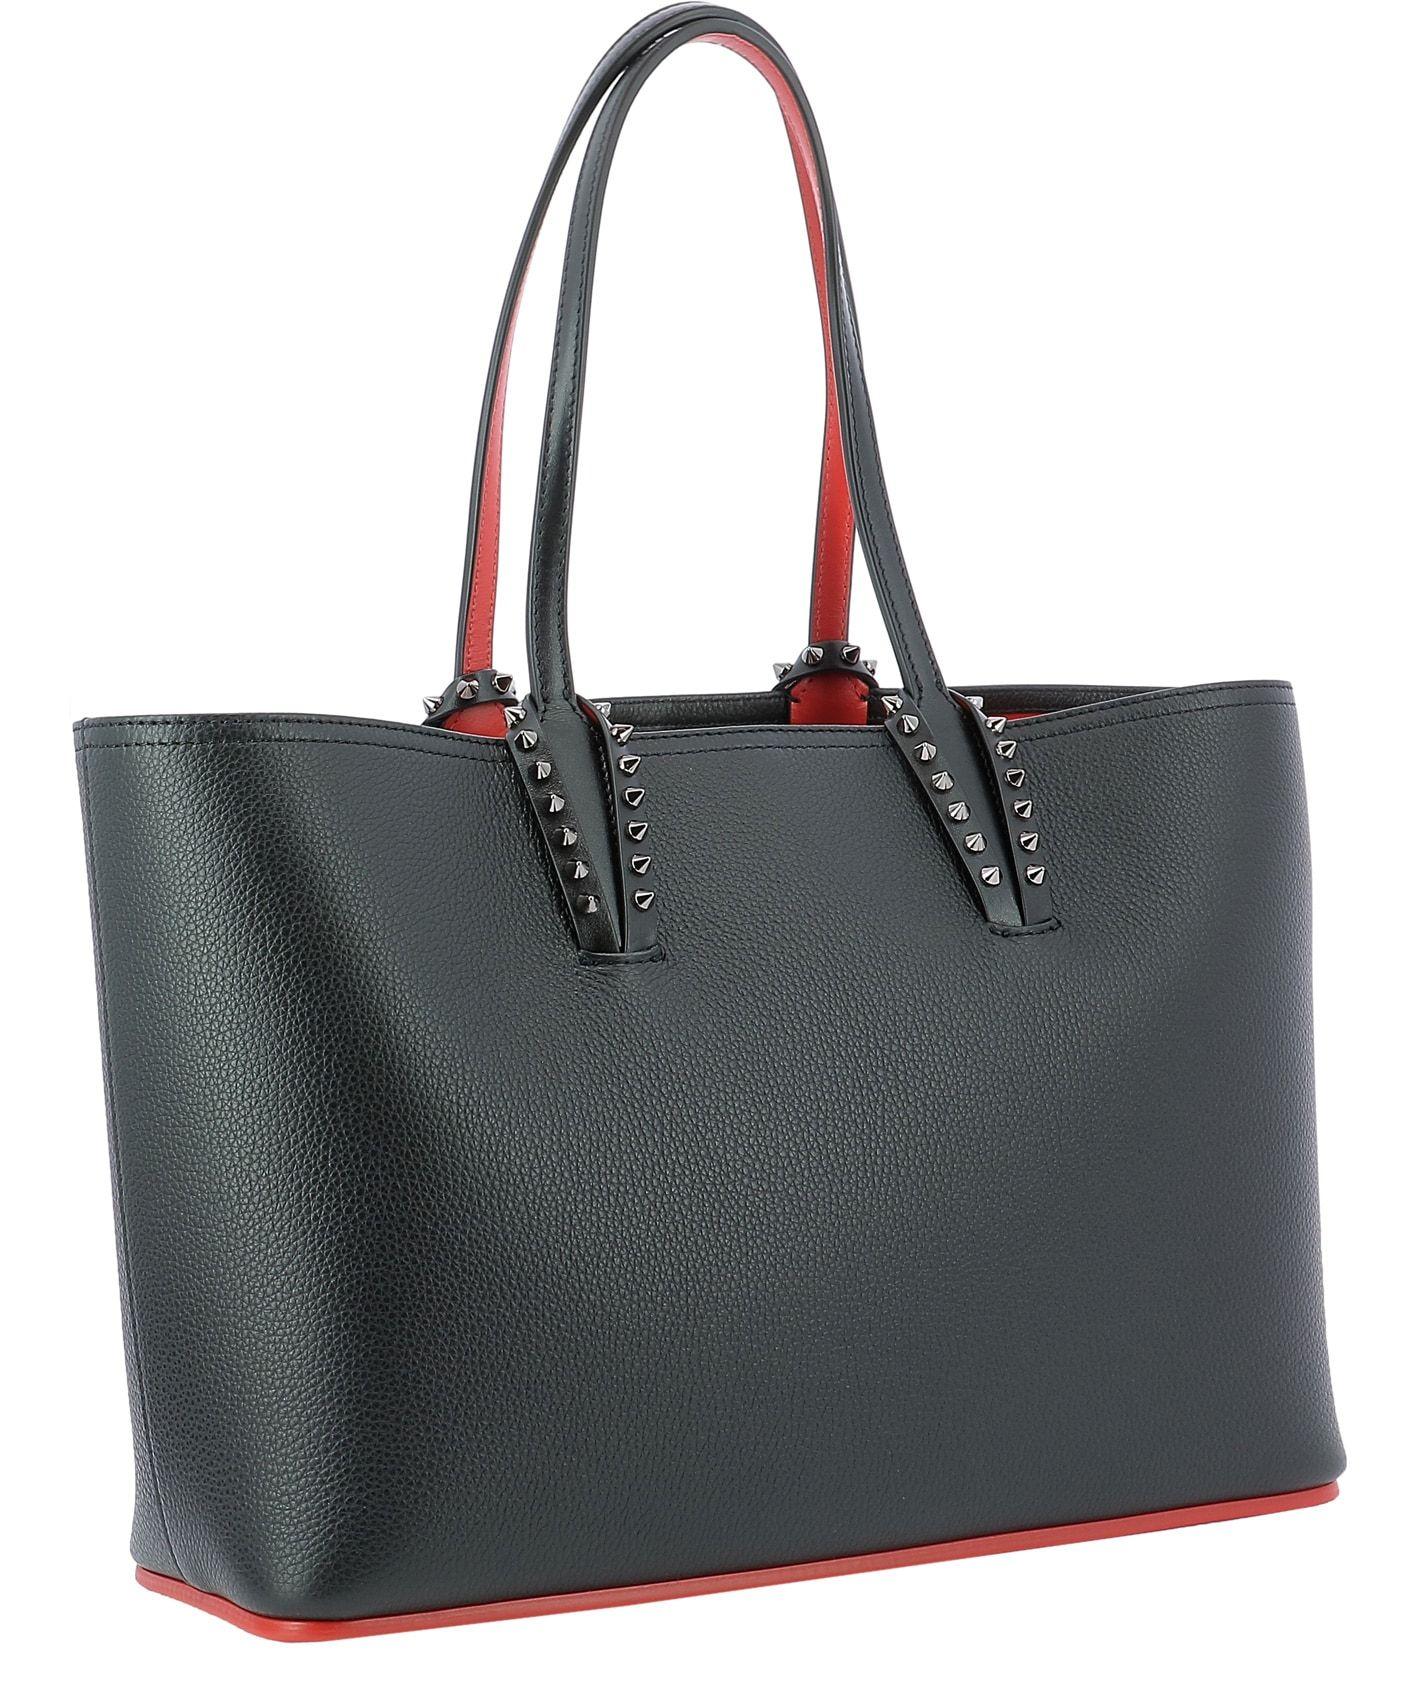 Christian Louboutin Cabata Spike-embellished Leather Tote Bag in Black ...